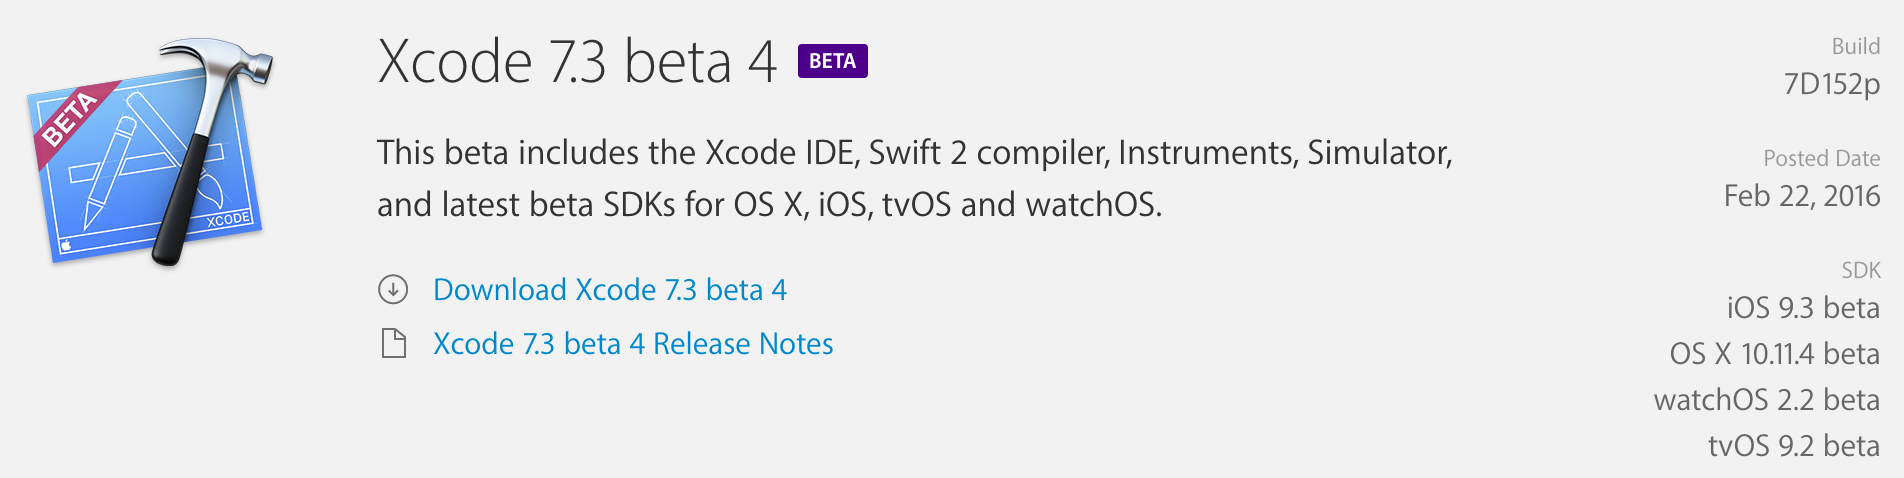 Xcode 7.3 beta 4 (7D152p)